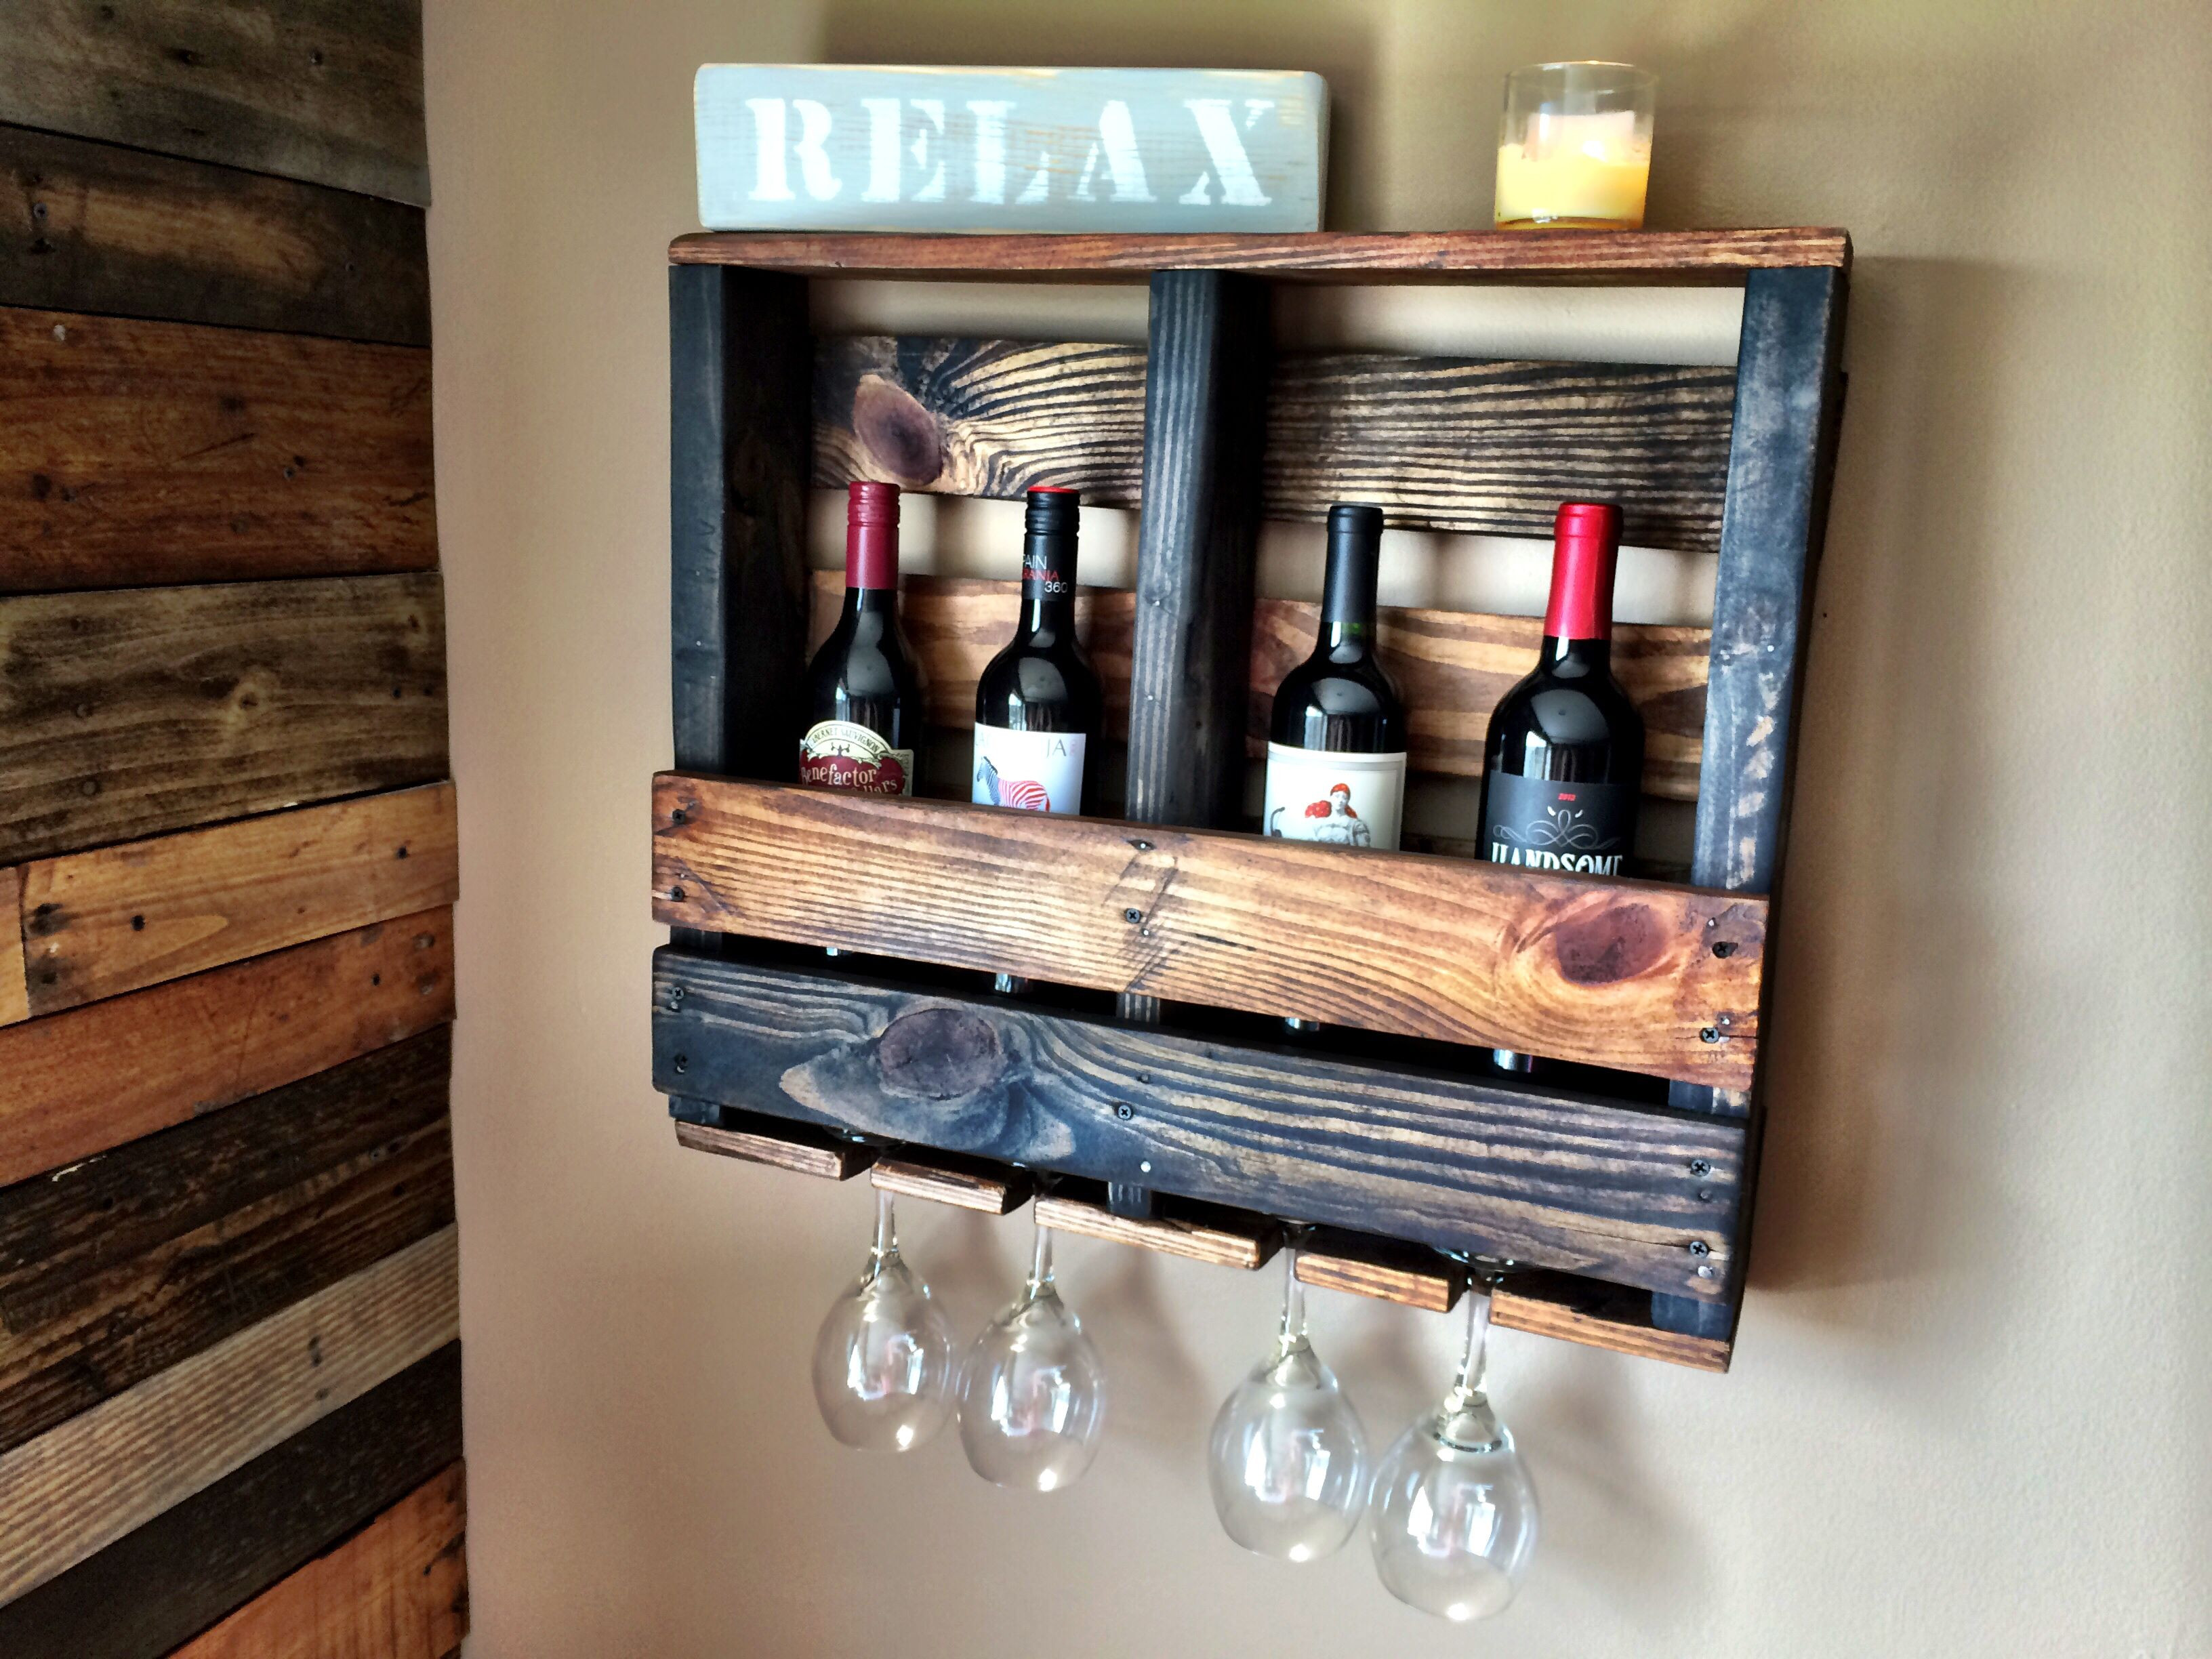 Best ideas about DIY Pallet Wine Racks
. Save or Pin DIY pallet wine rack Organization Now.